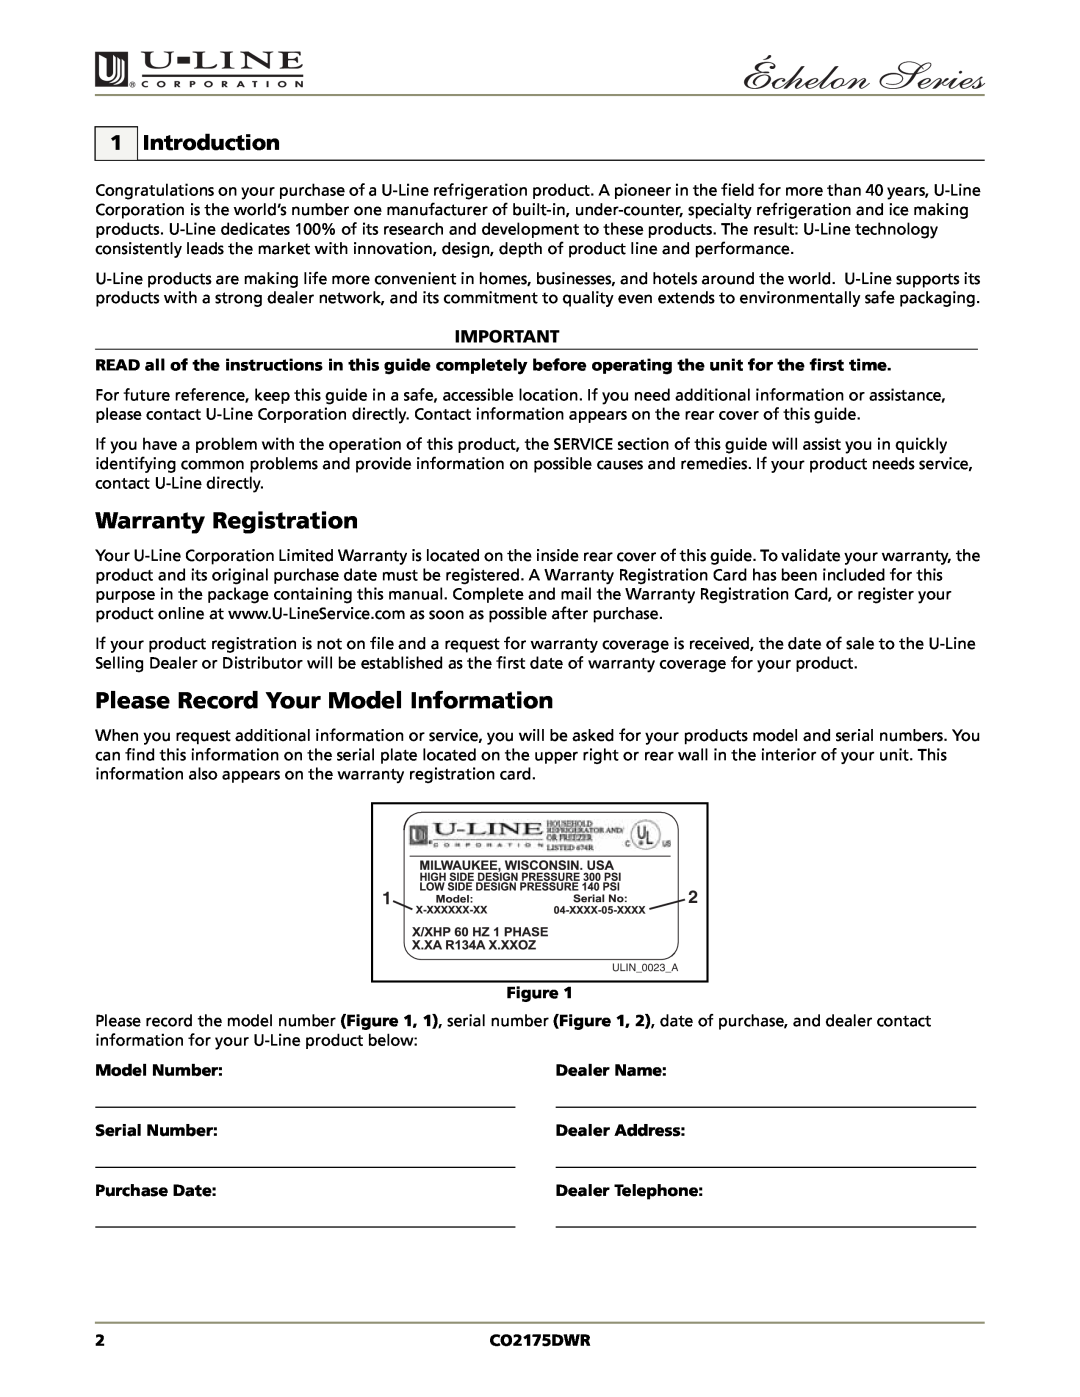 U-Line CO2175DWR manual Warranty Registration, Please Record Your Model Information, Introduction 